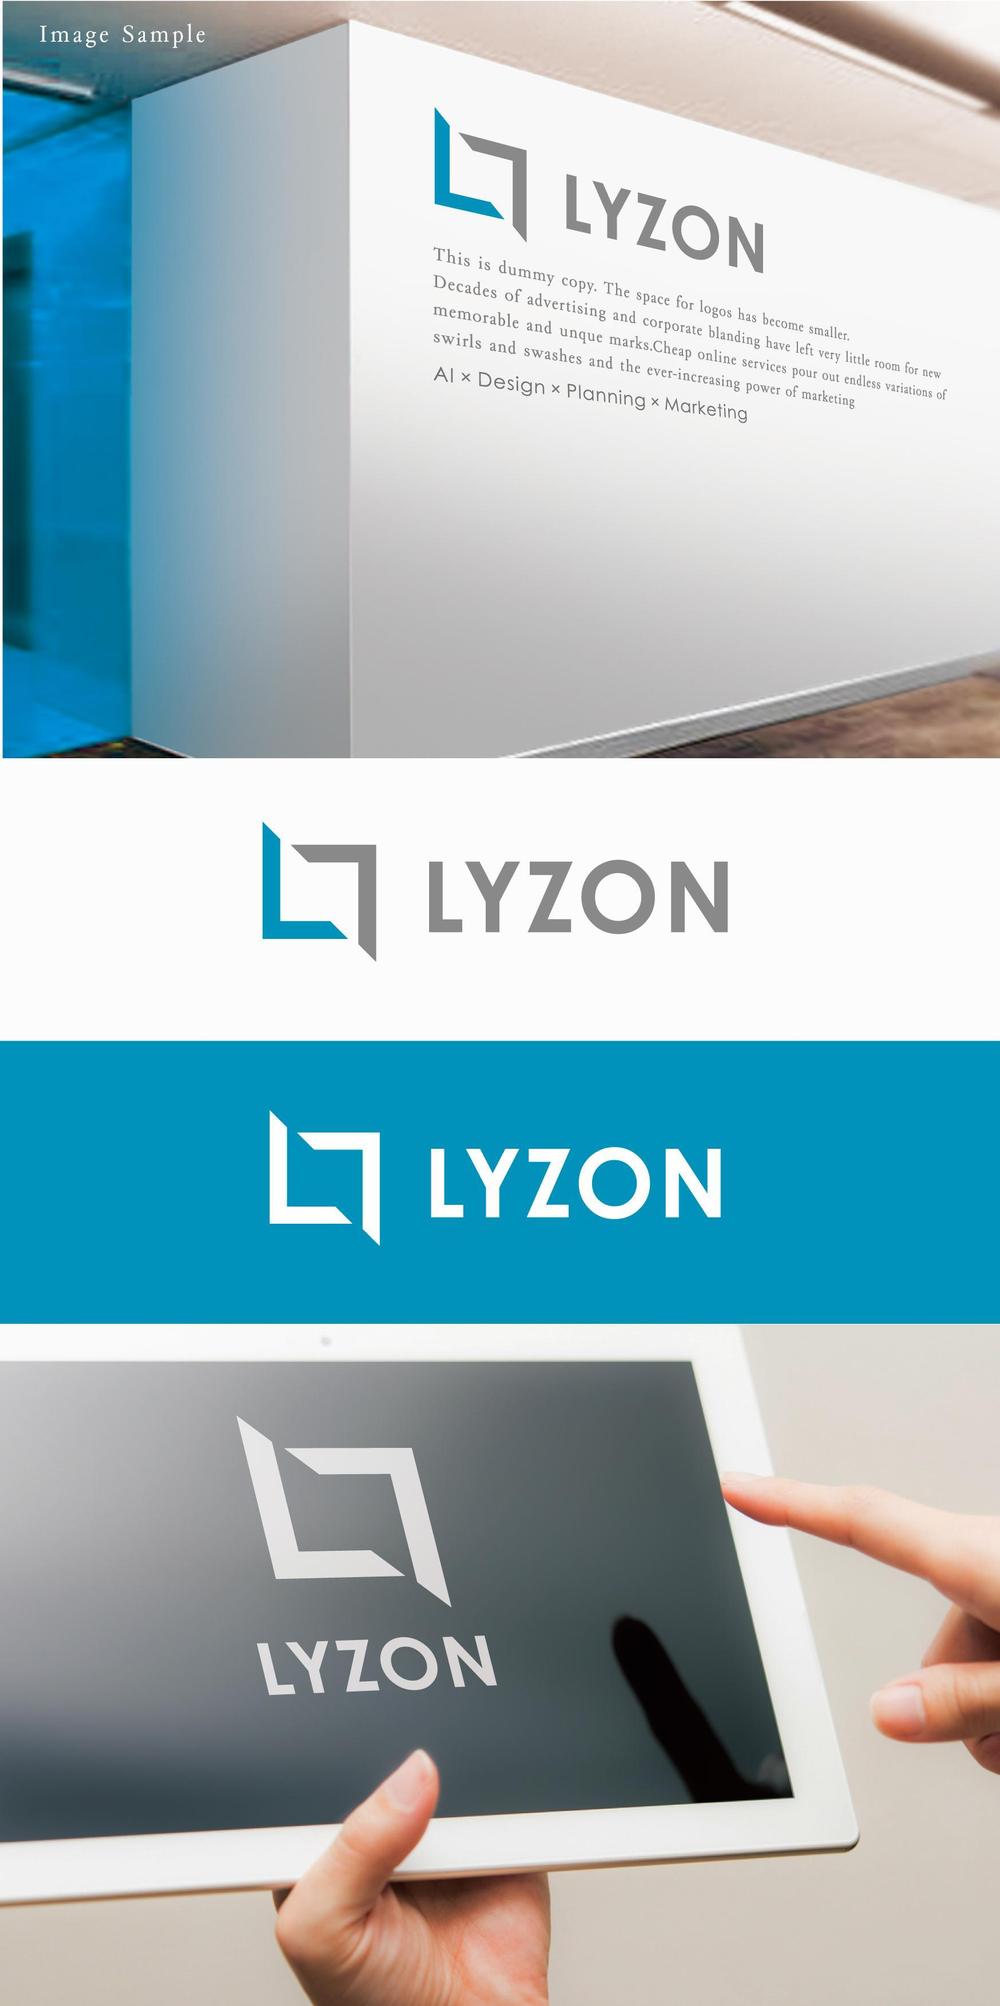 LYZON様-04.jpg